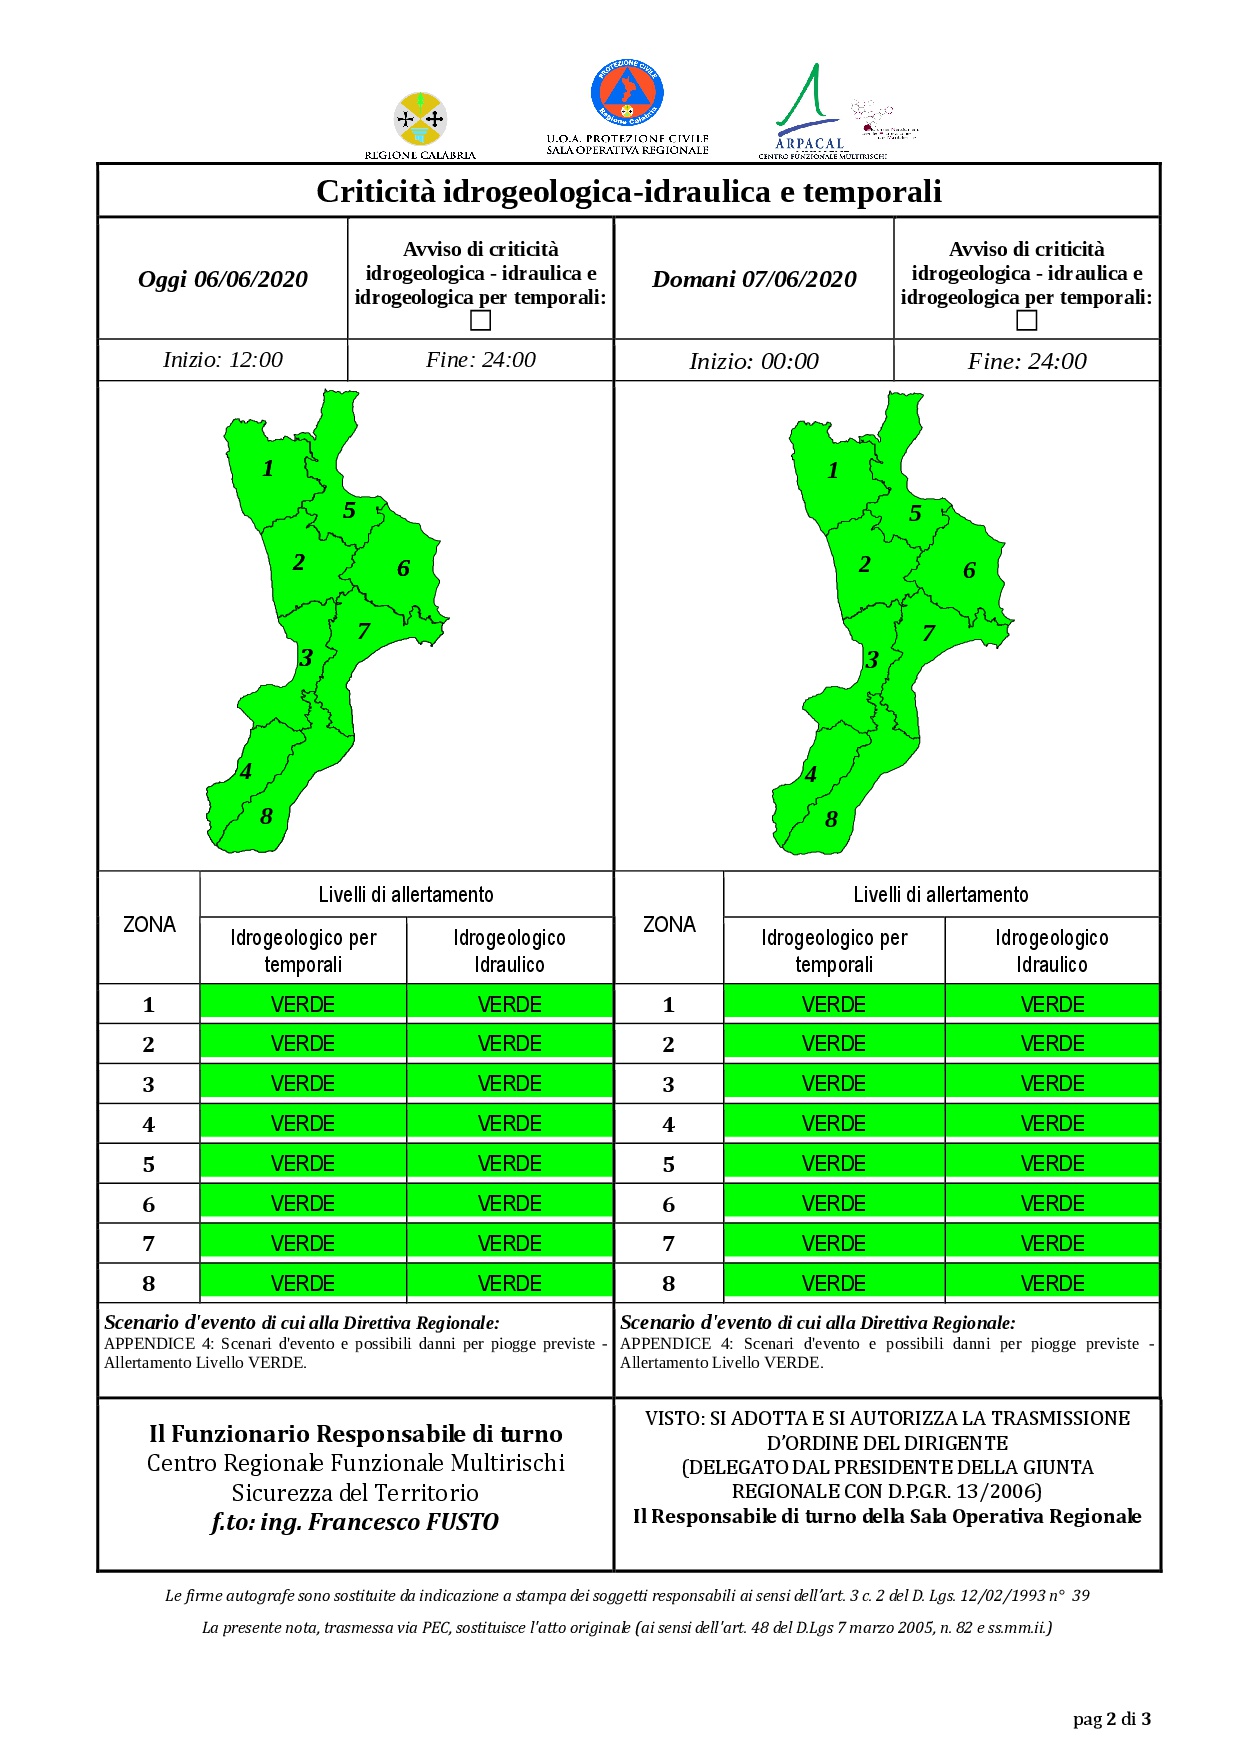 Criticità idrogeologica-idraulica e temporali in Calabria 06-06-2020